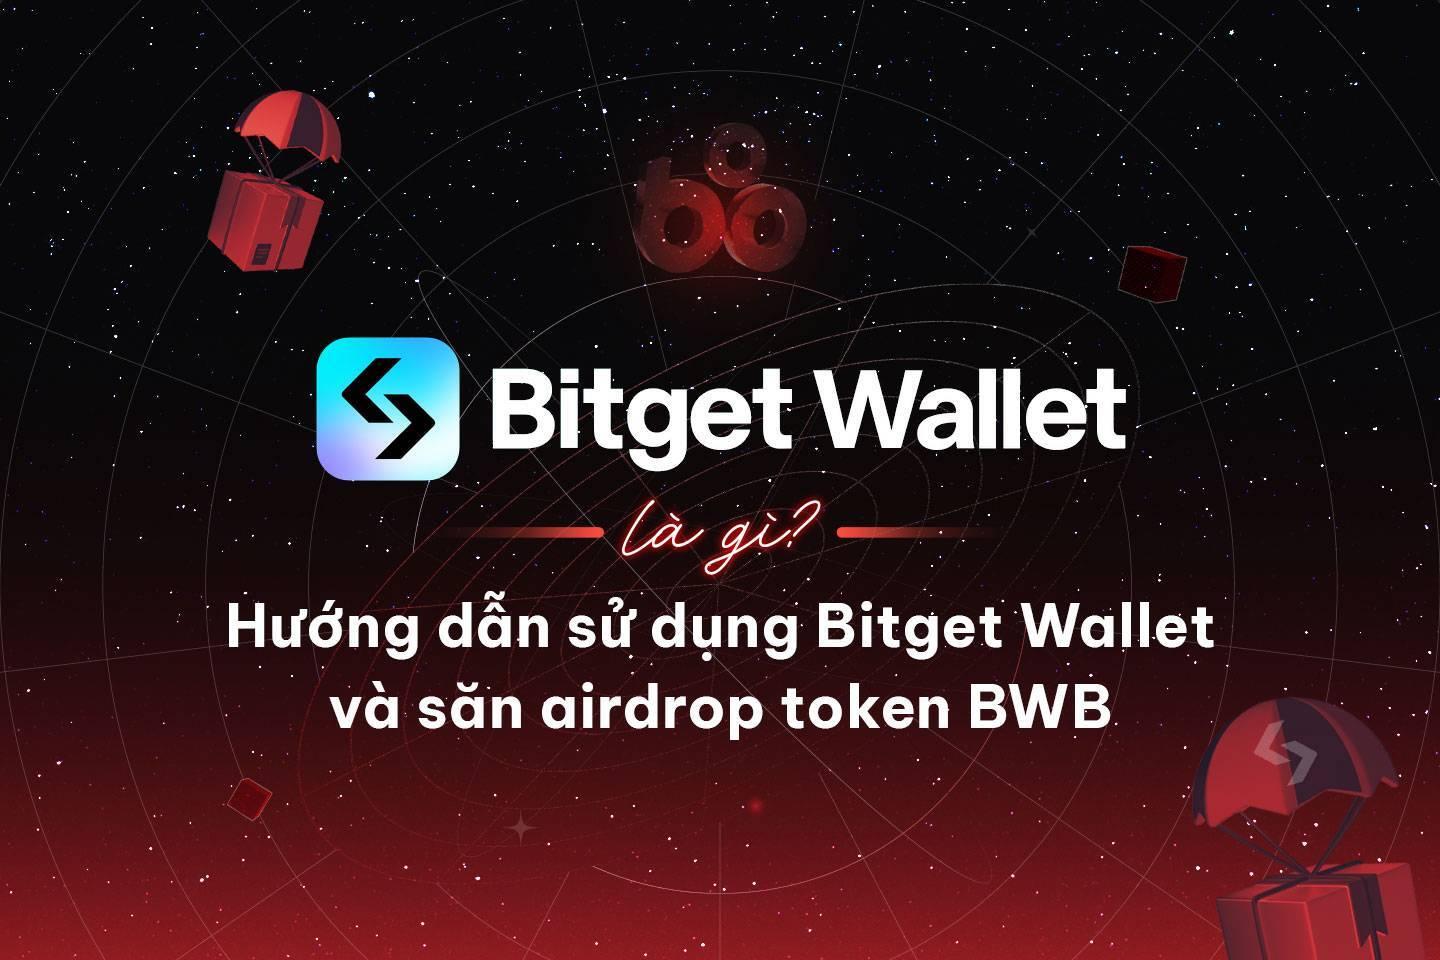 bitget-wallet-la-gi-huong-dan-su-dung-bitget-wallet-va-san-airdrop-token-bwb